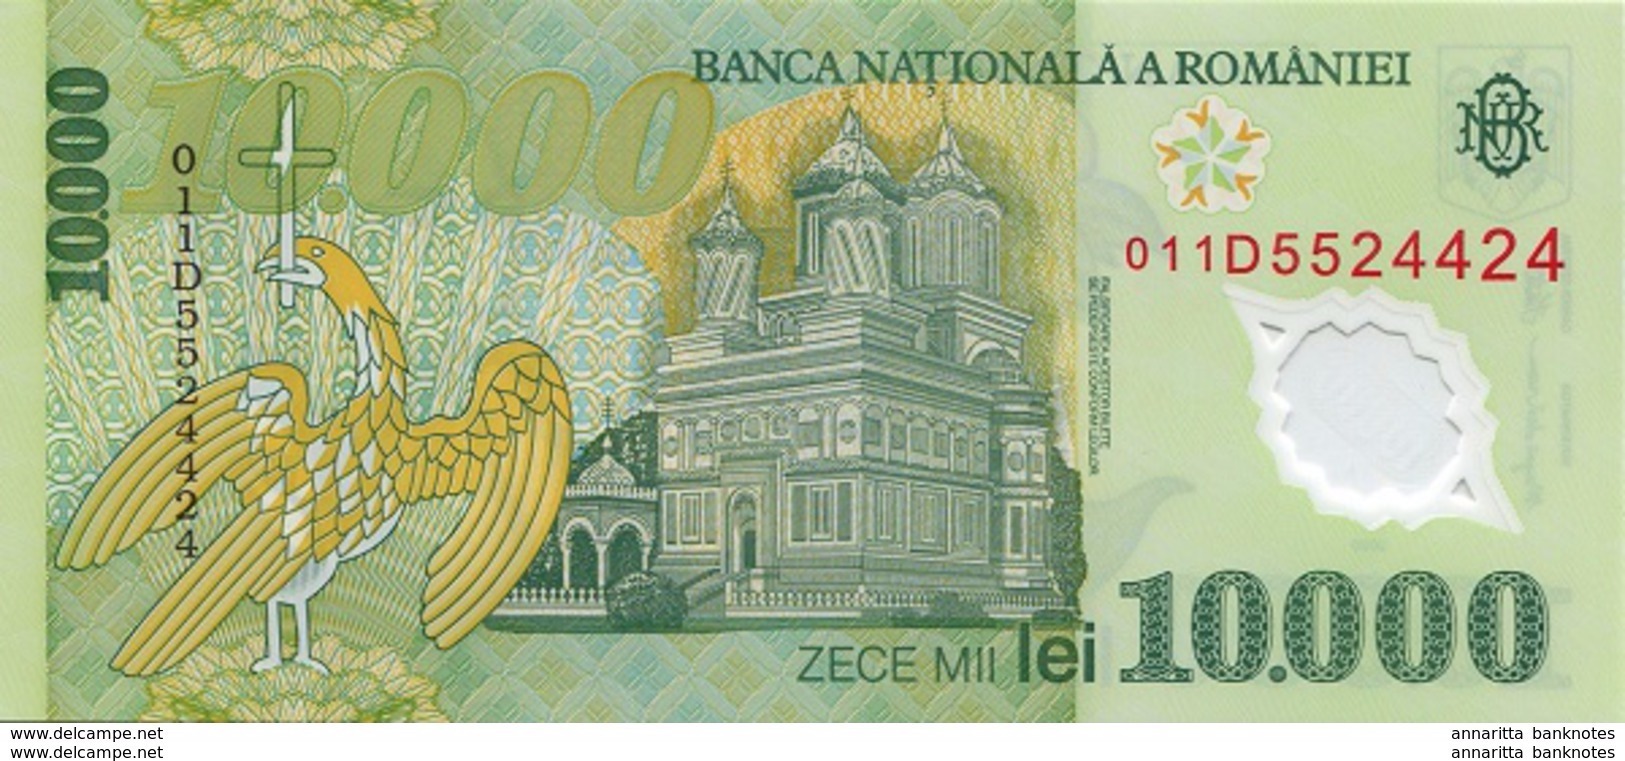 ROMANIA 10000 LEI 2000 (2001) P-112b UNC PREFIX 01 [RO273b] - Roemenië